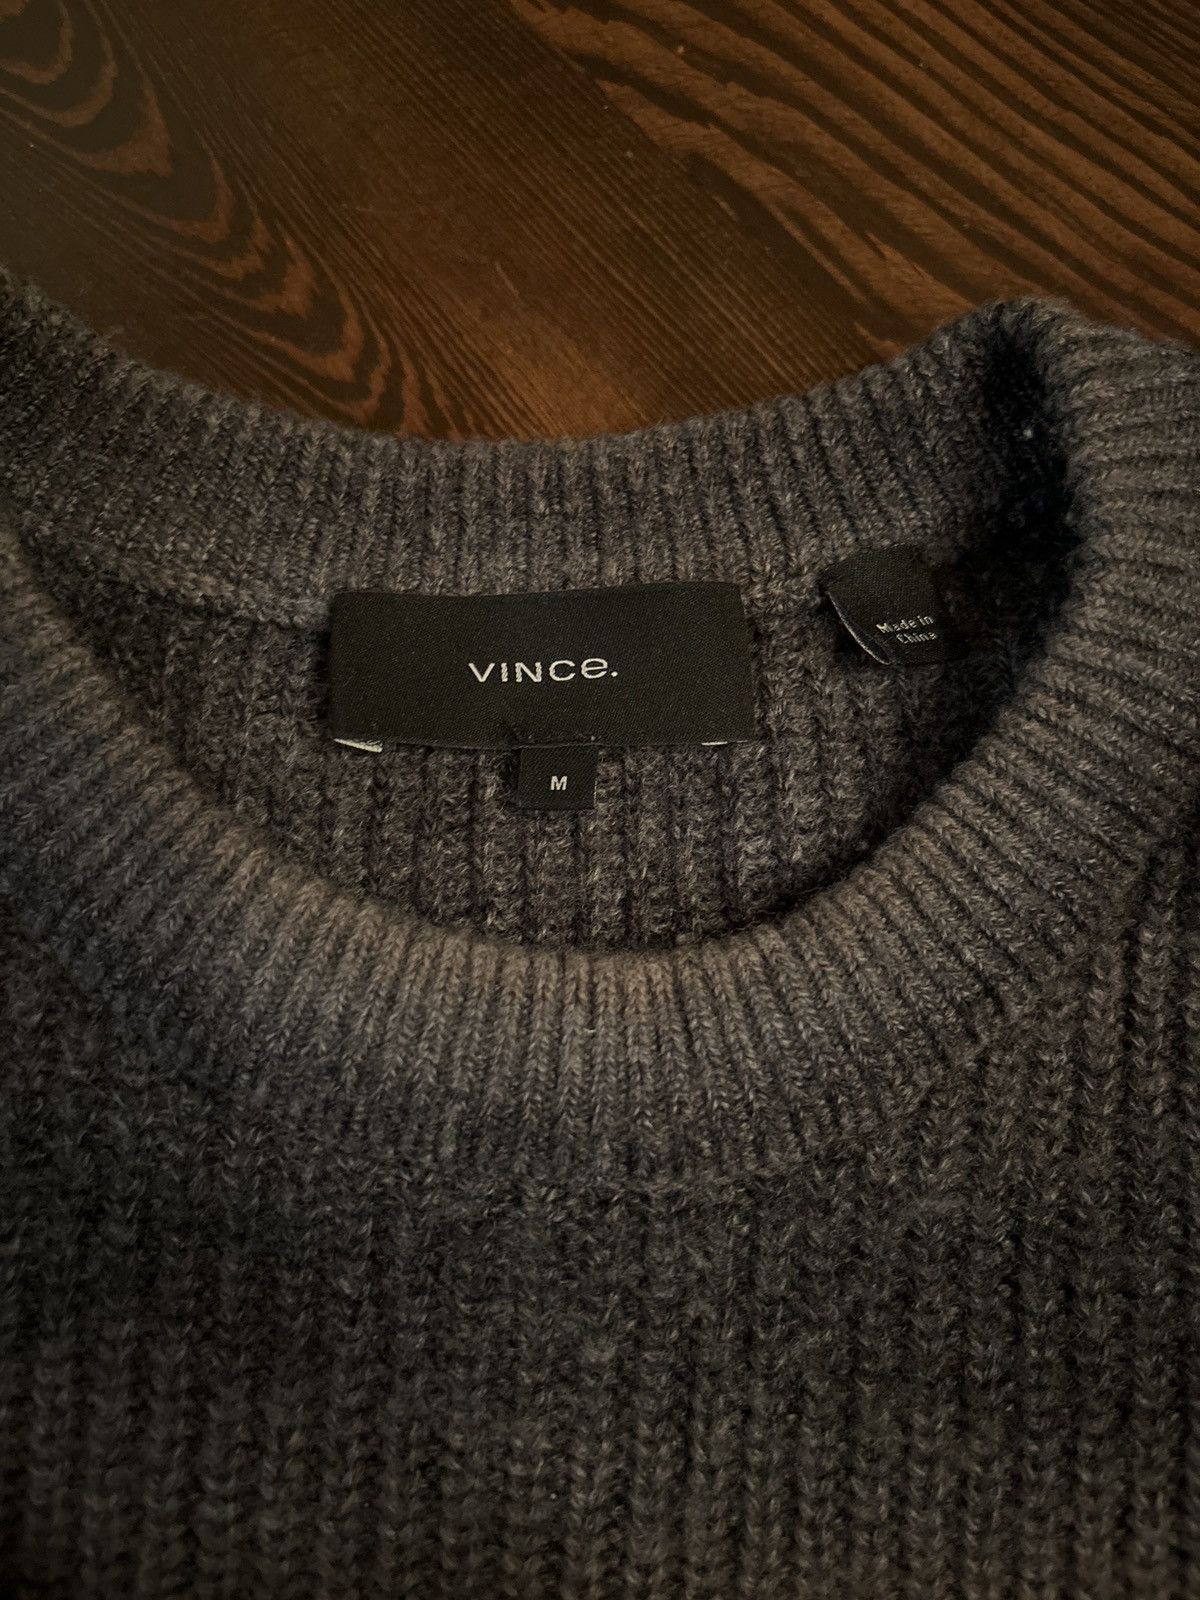 Vince Grey Striped Cashmere Blend Sweater Size US M / EU 48-50 / 2 - 3 Thumbnail